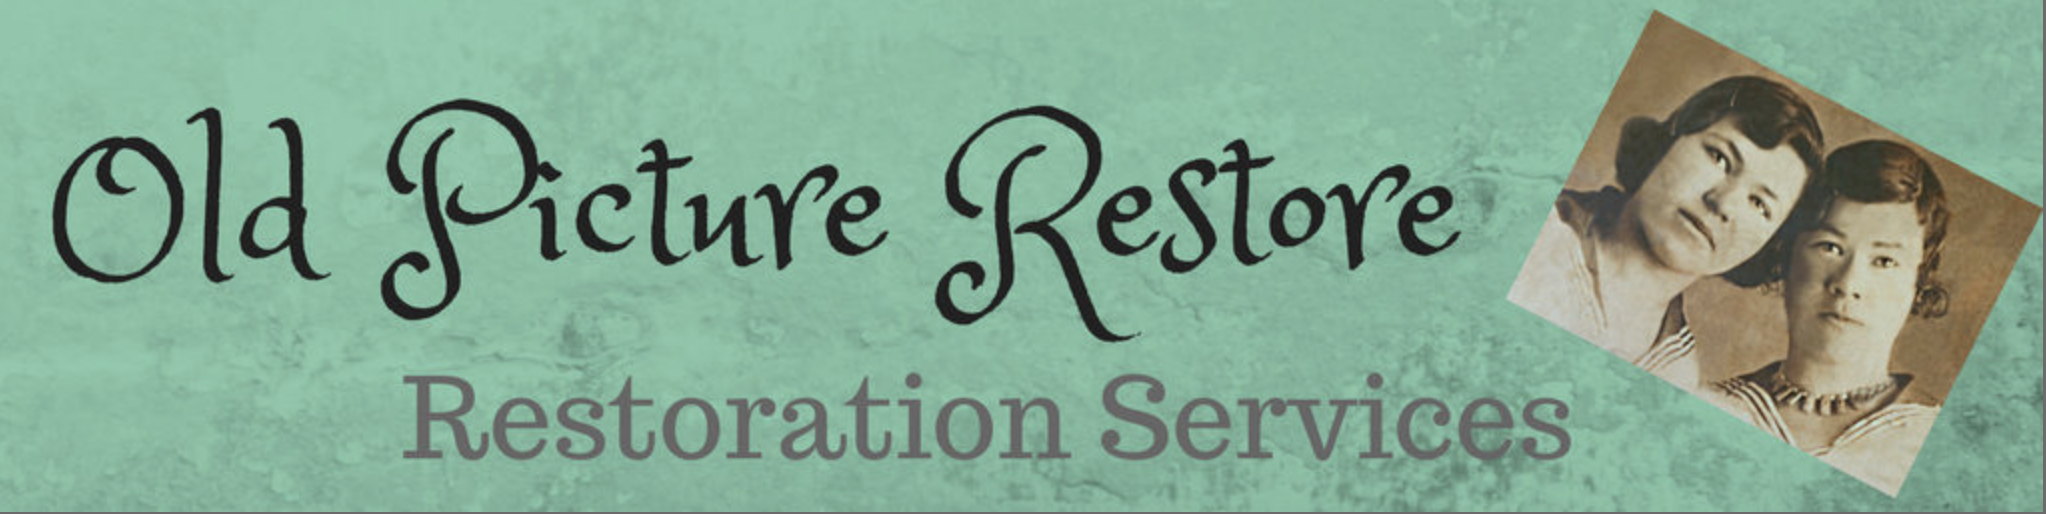 Old Picture Restoration Services Logo